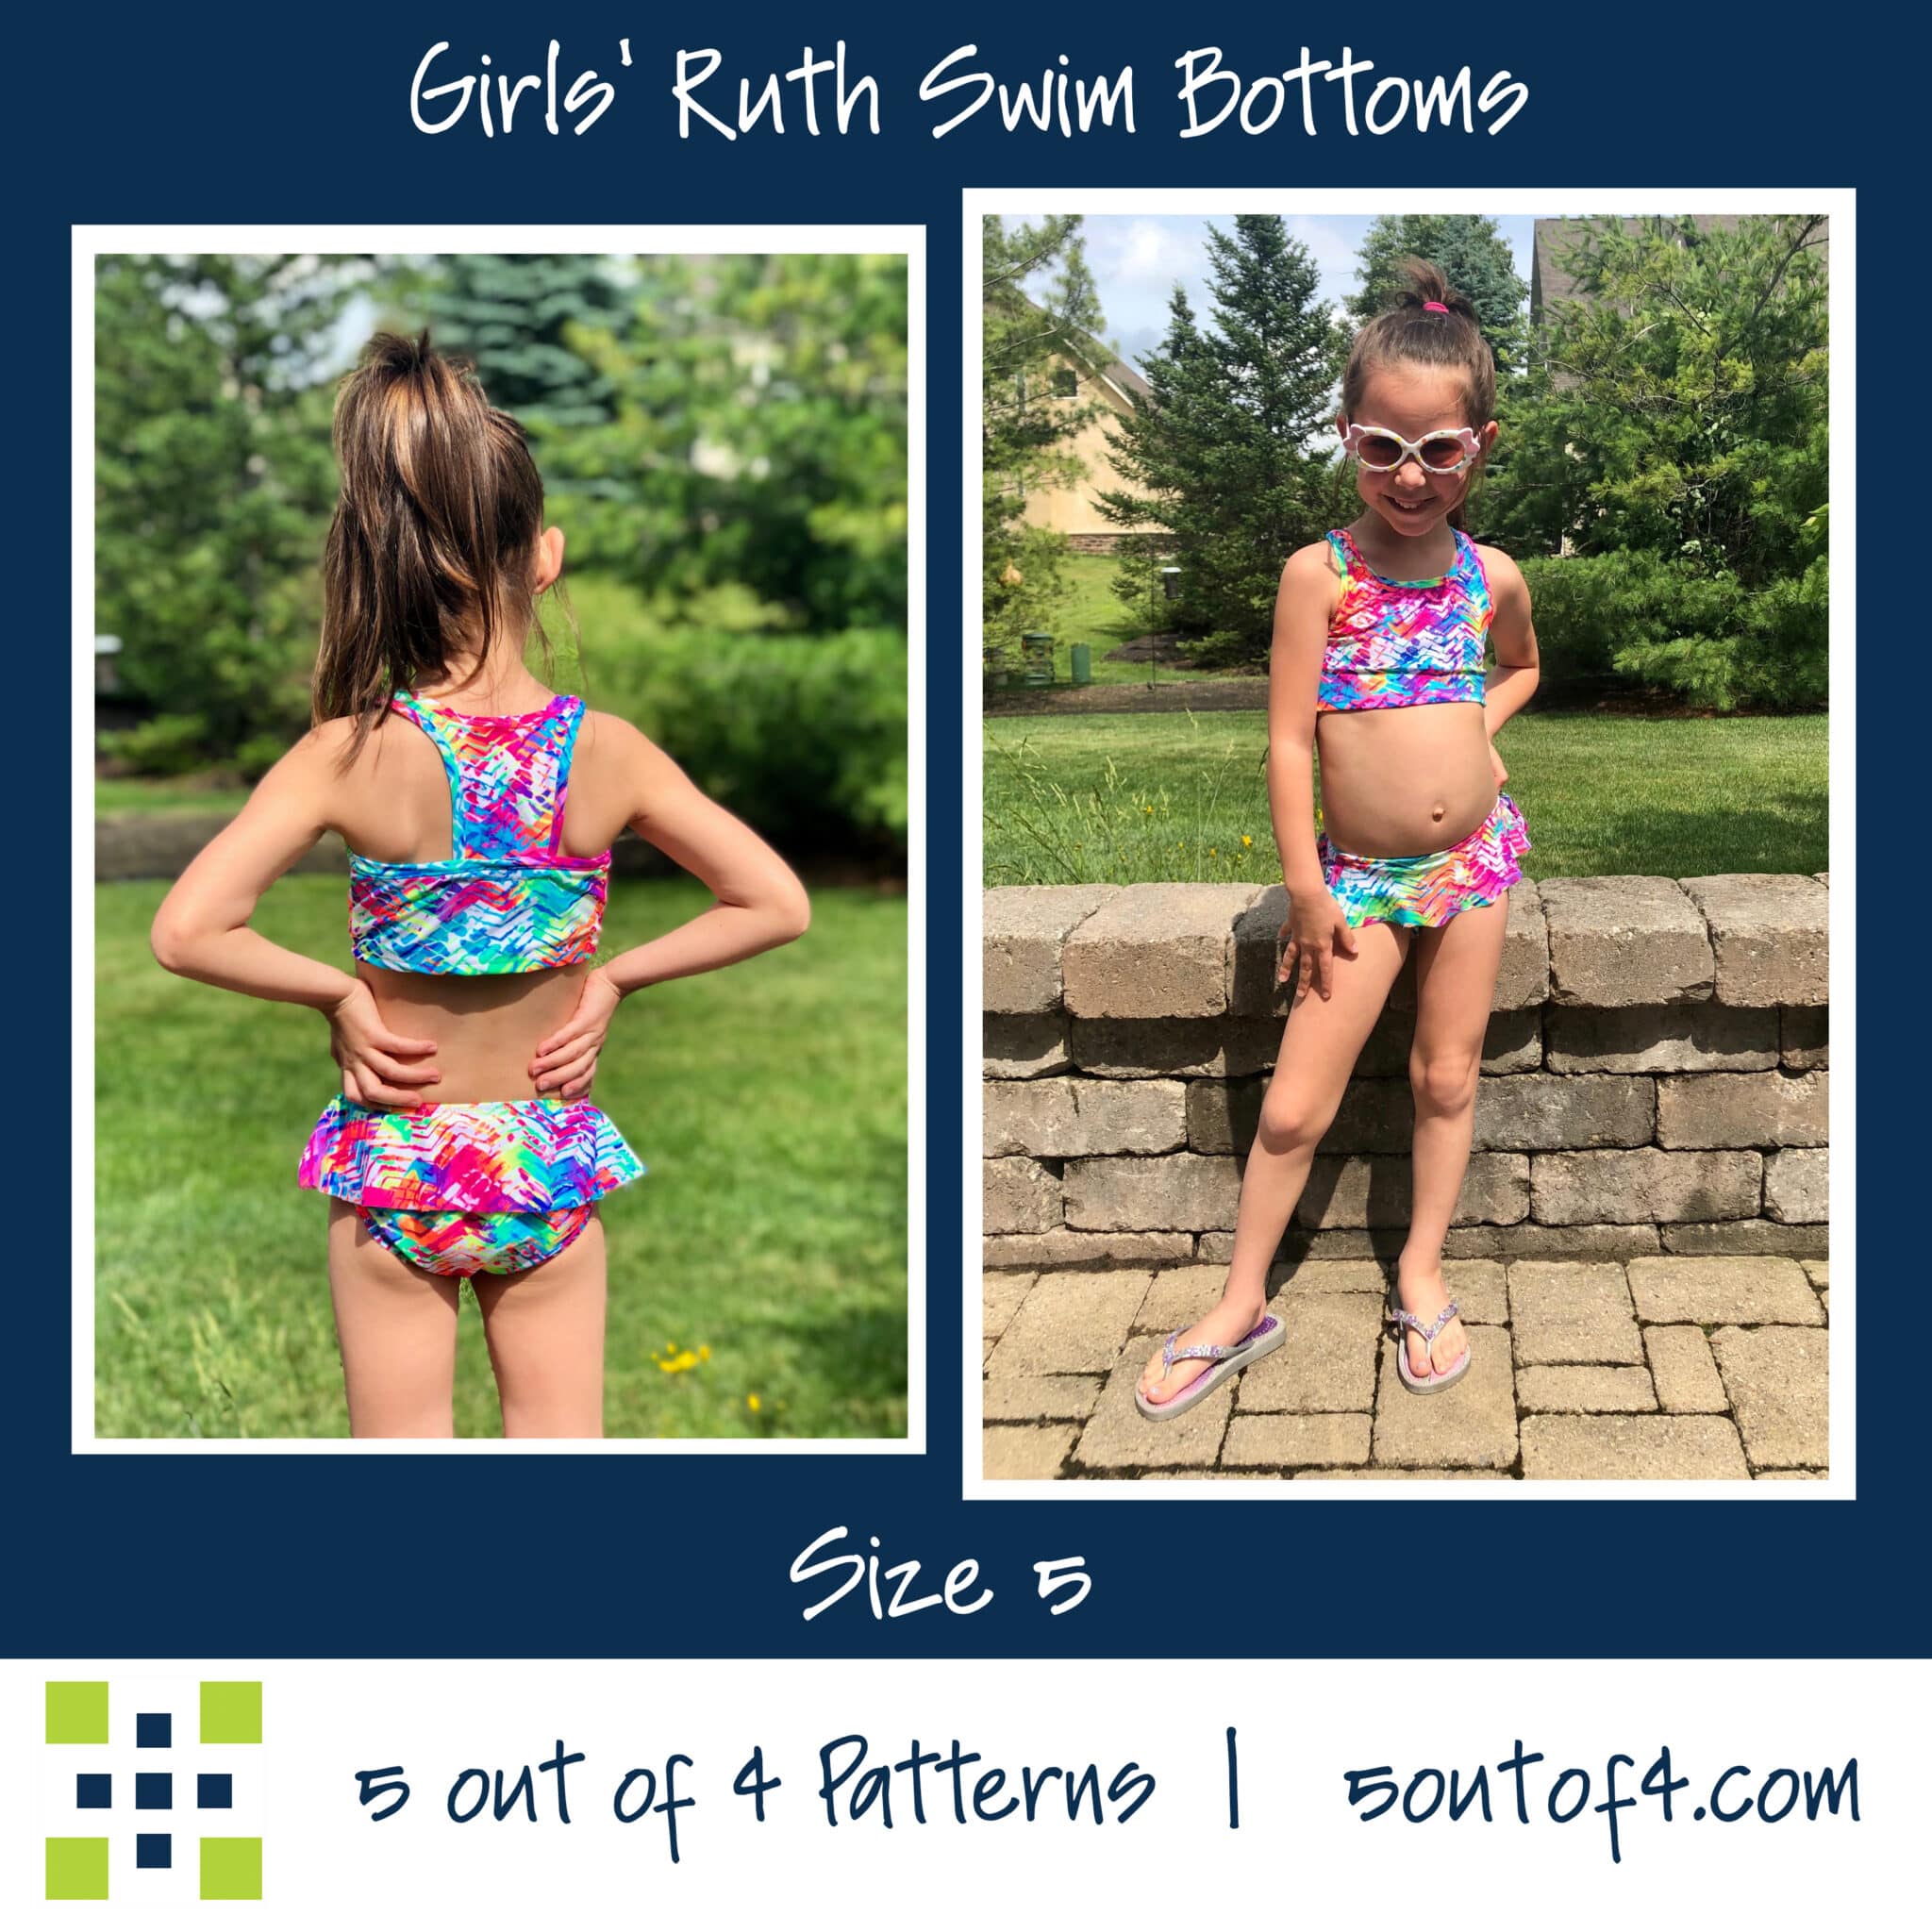 Kids' Ruth Swim Bottoms